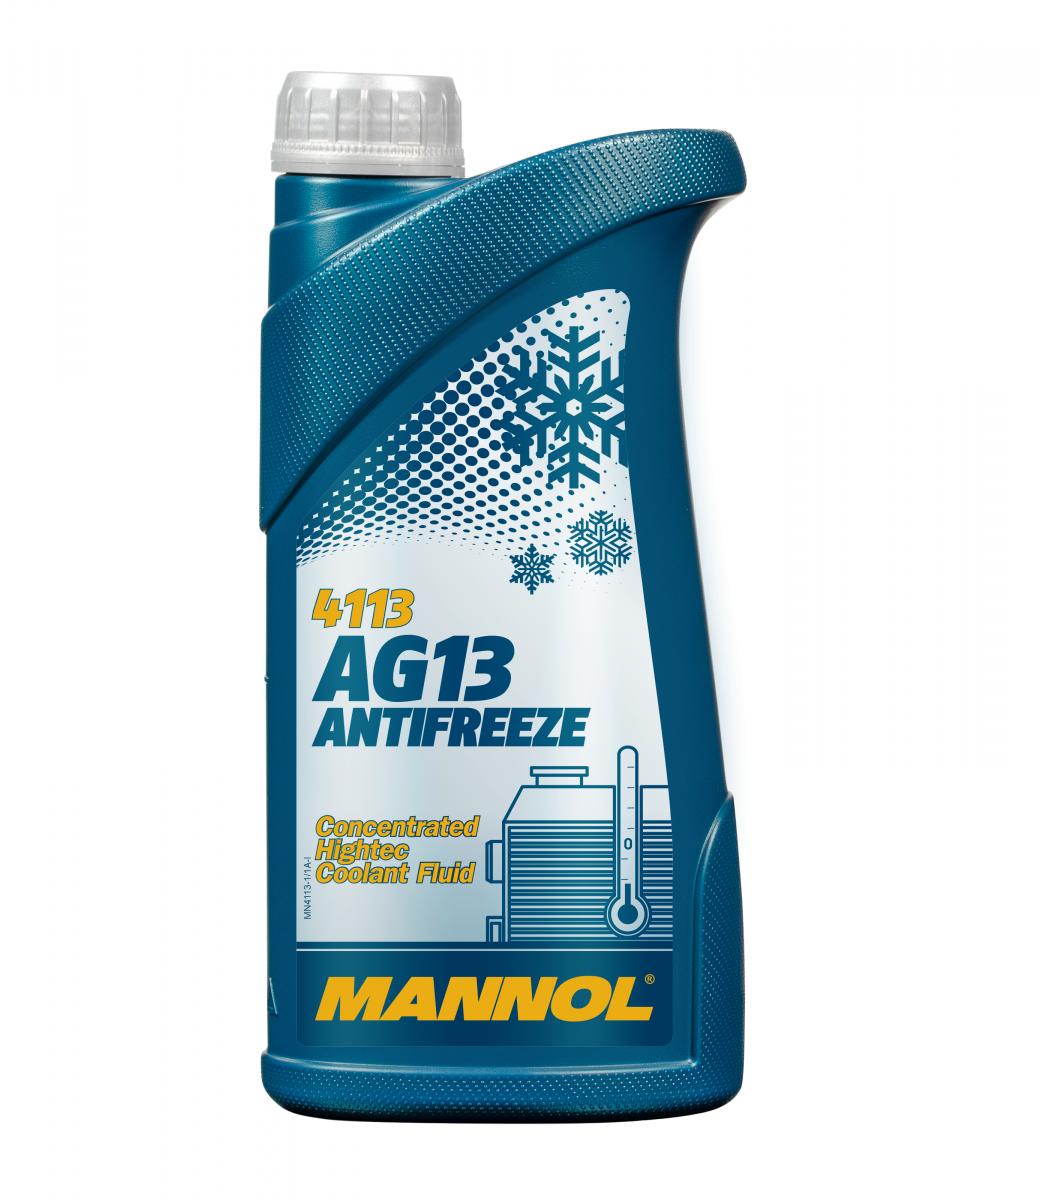 1 Liter MANNOL hightech  Antifreeze AG13 Frostschutz Konzentrat grün -40°C